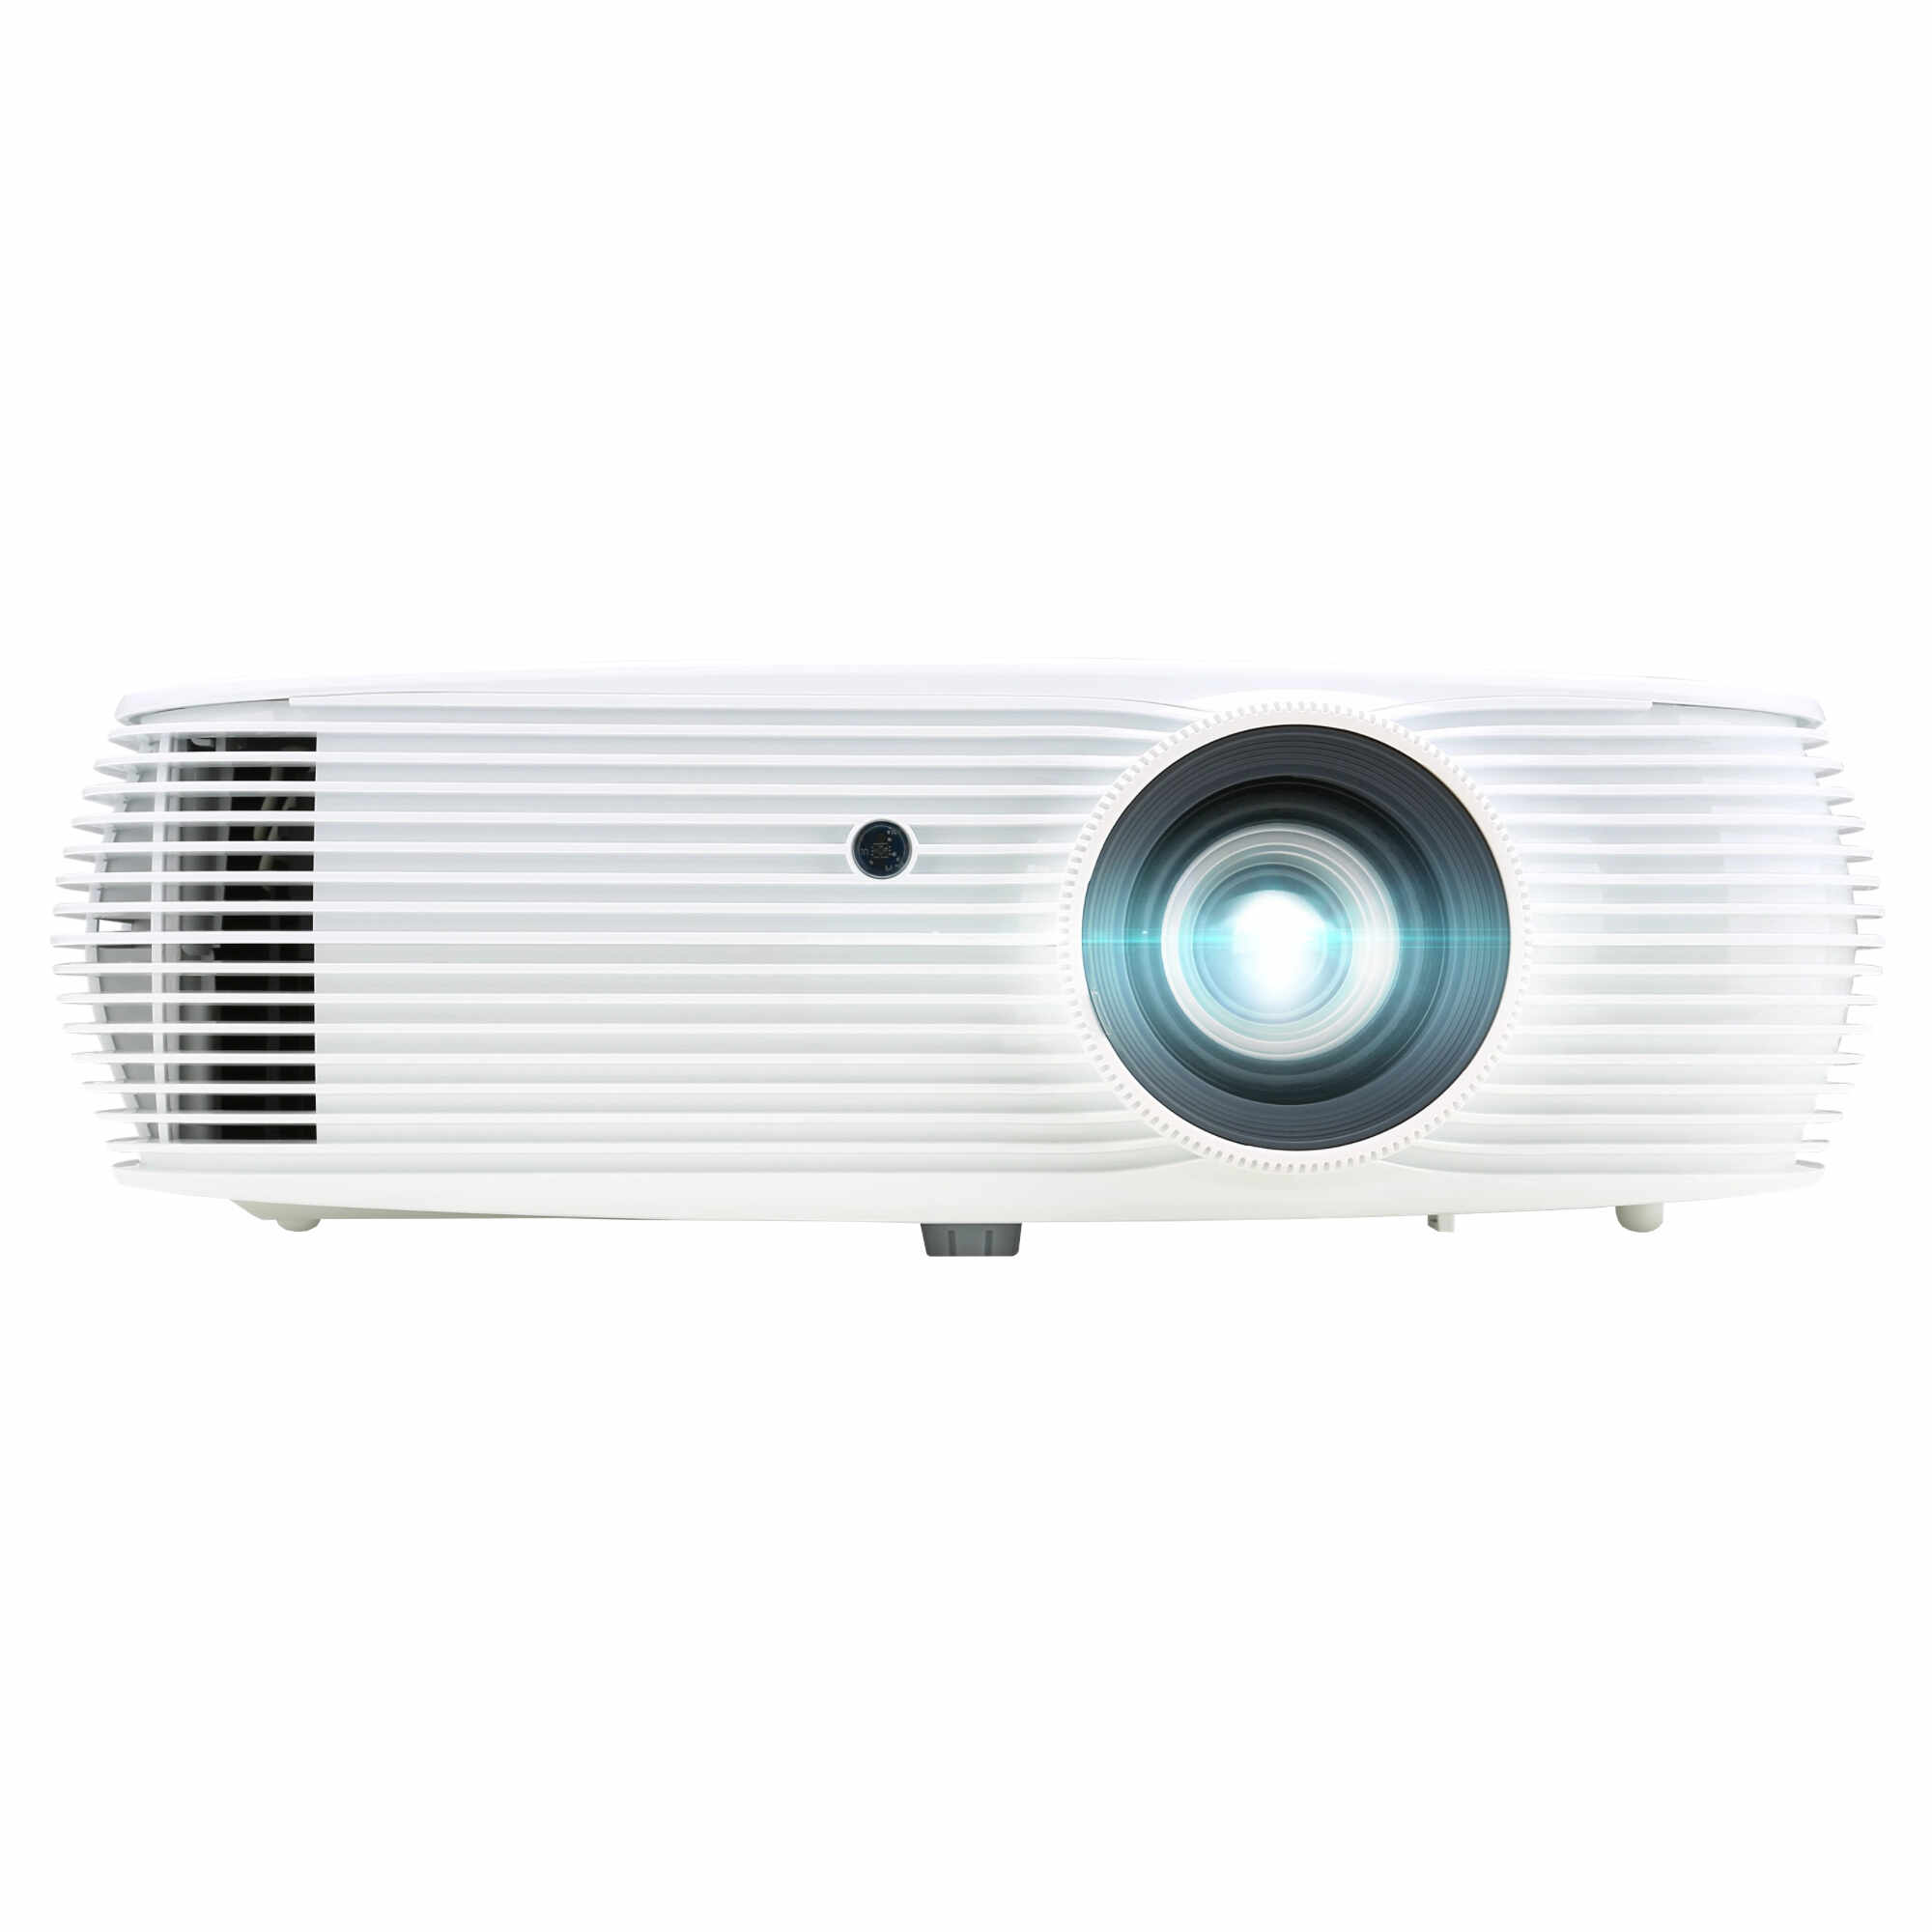 Videoproiector Acer P5535, Full HD, 240 W, 4500 lm, 120 Hz, Alb